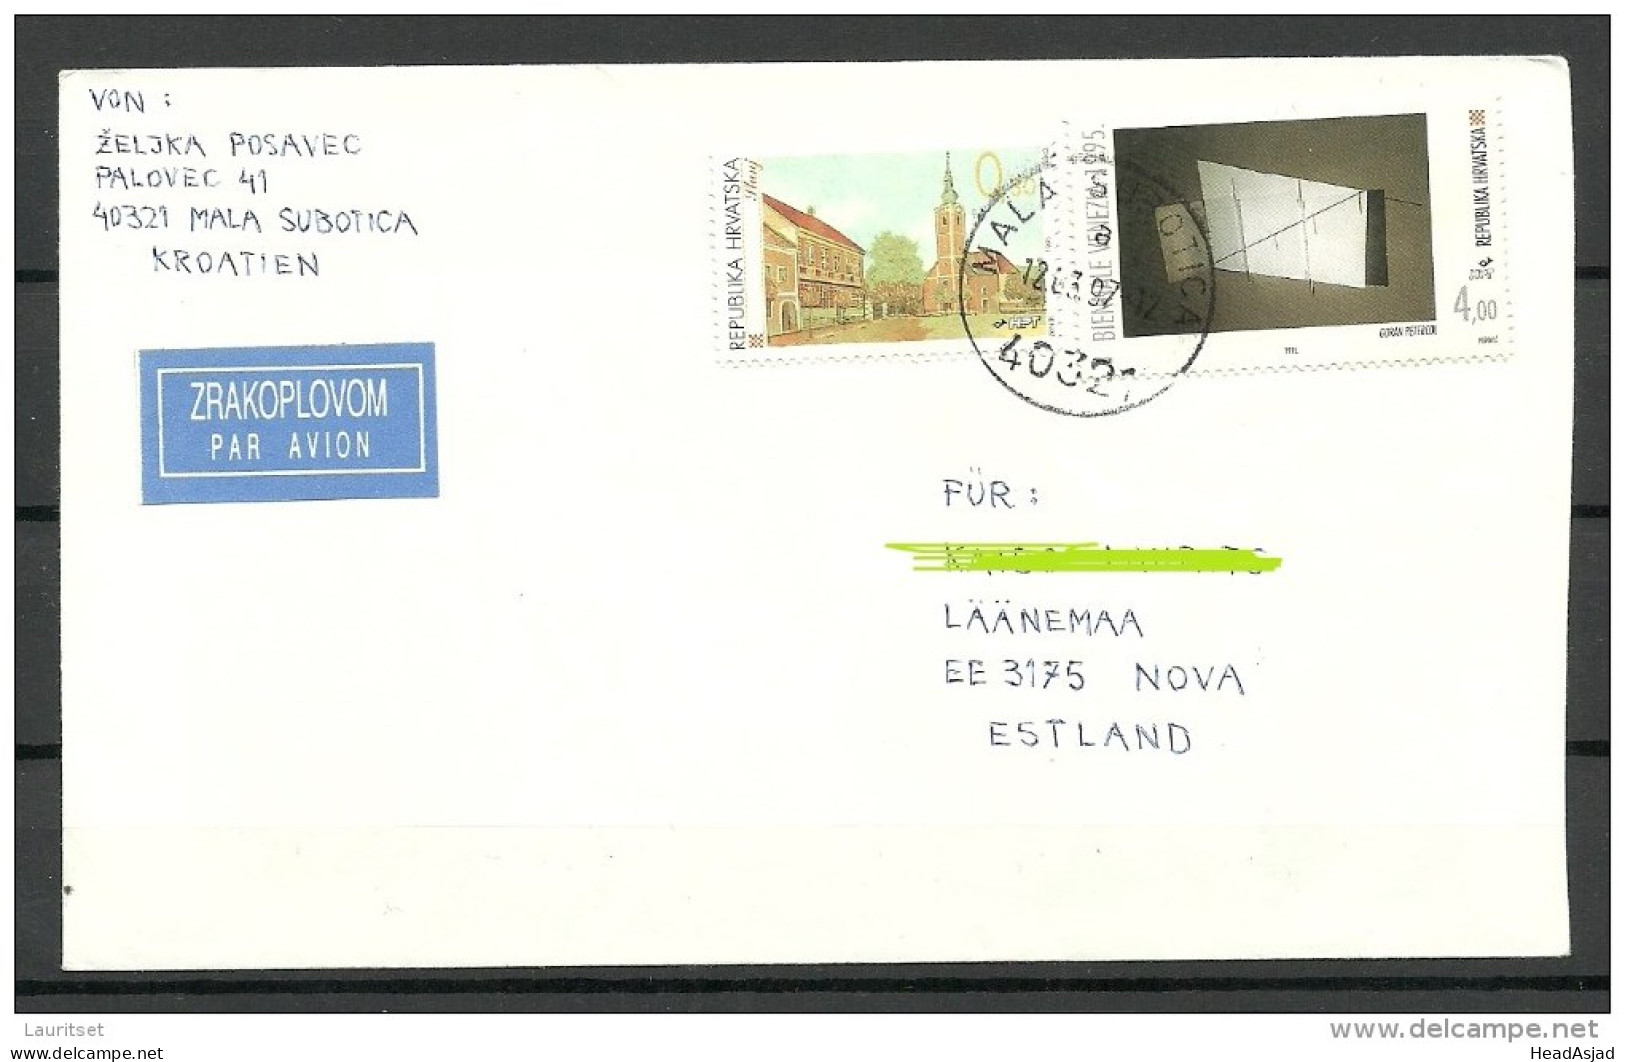 CROATIA HORVATIA Hrvatska 1997 Air Mail Cover To Estonia Estland - Croatie